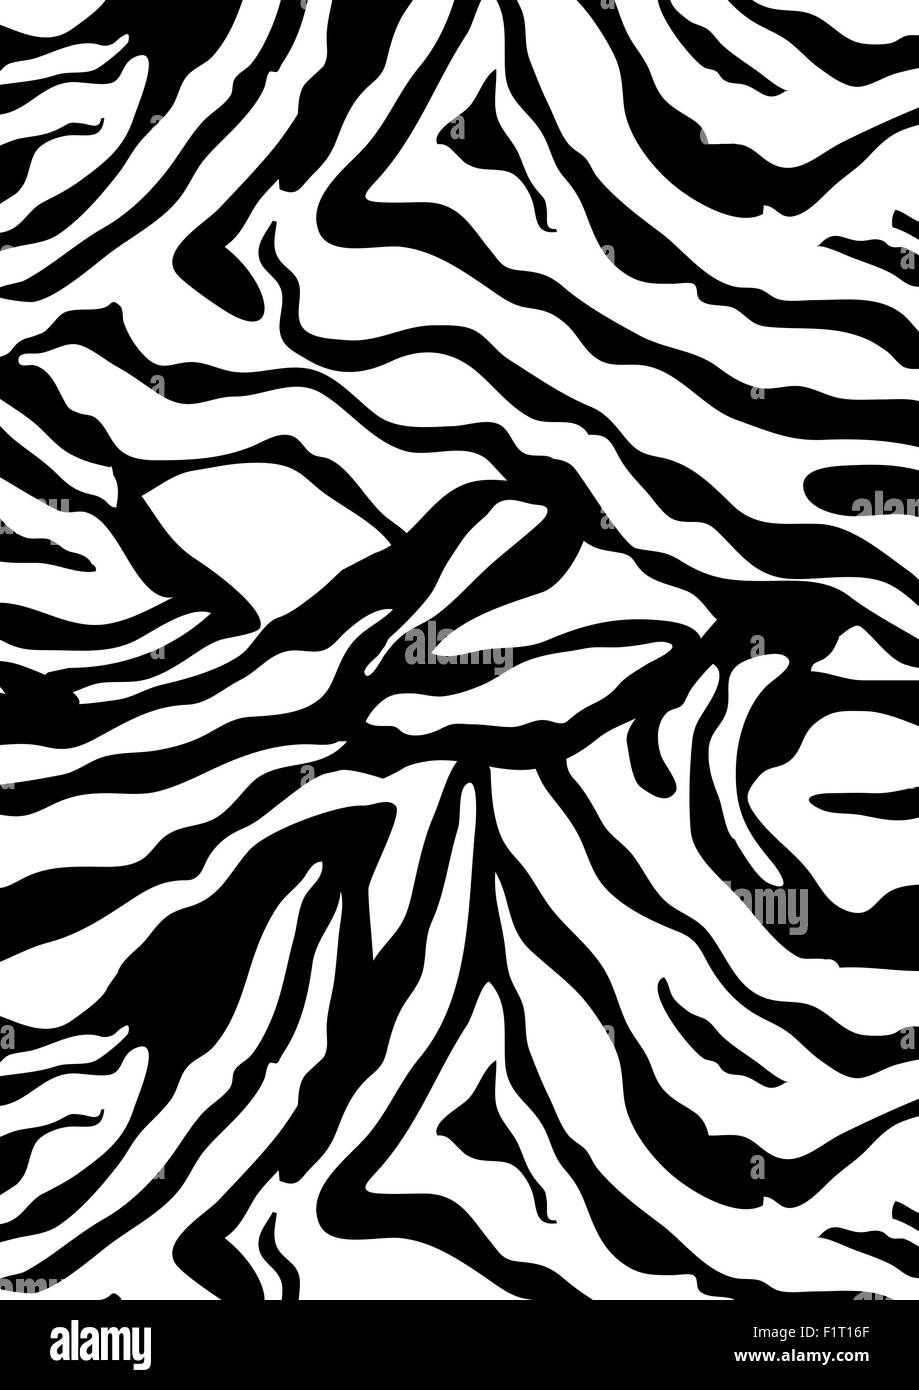 Zebra stripes repeat pattern in black and white Stock Vector